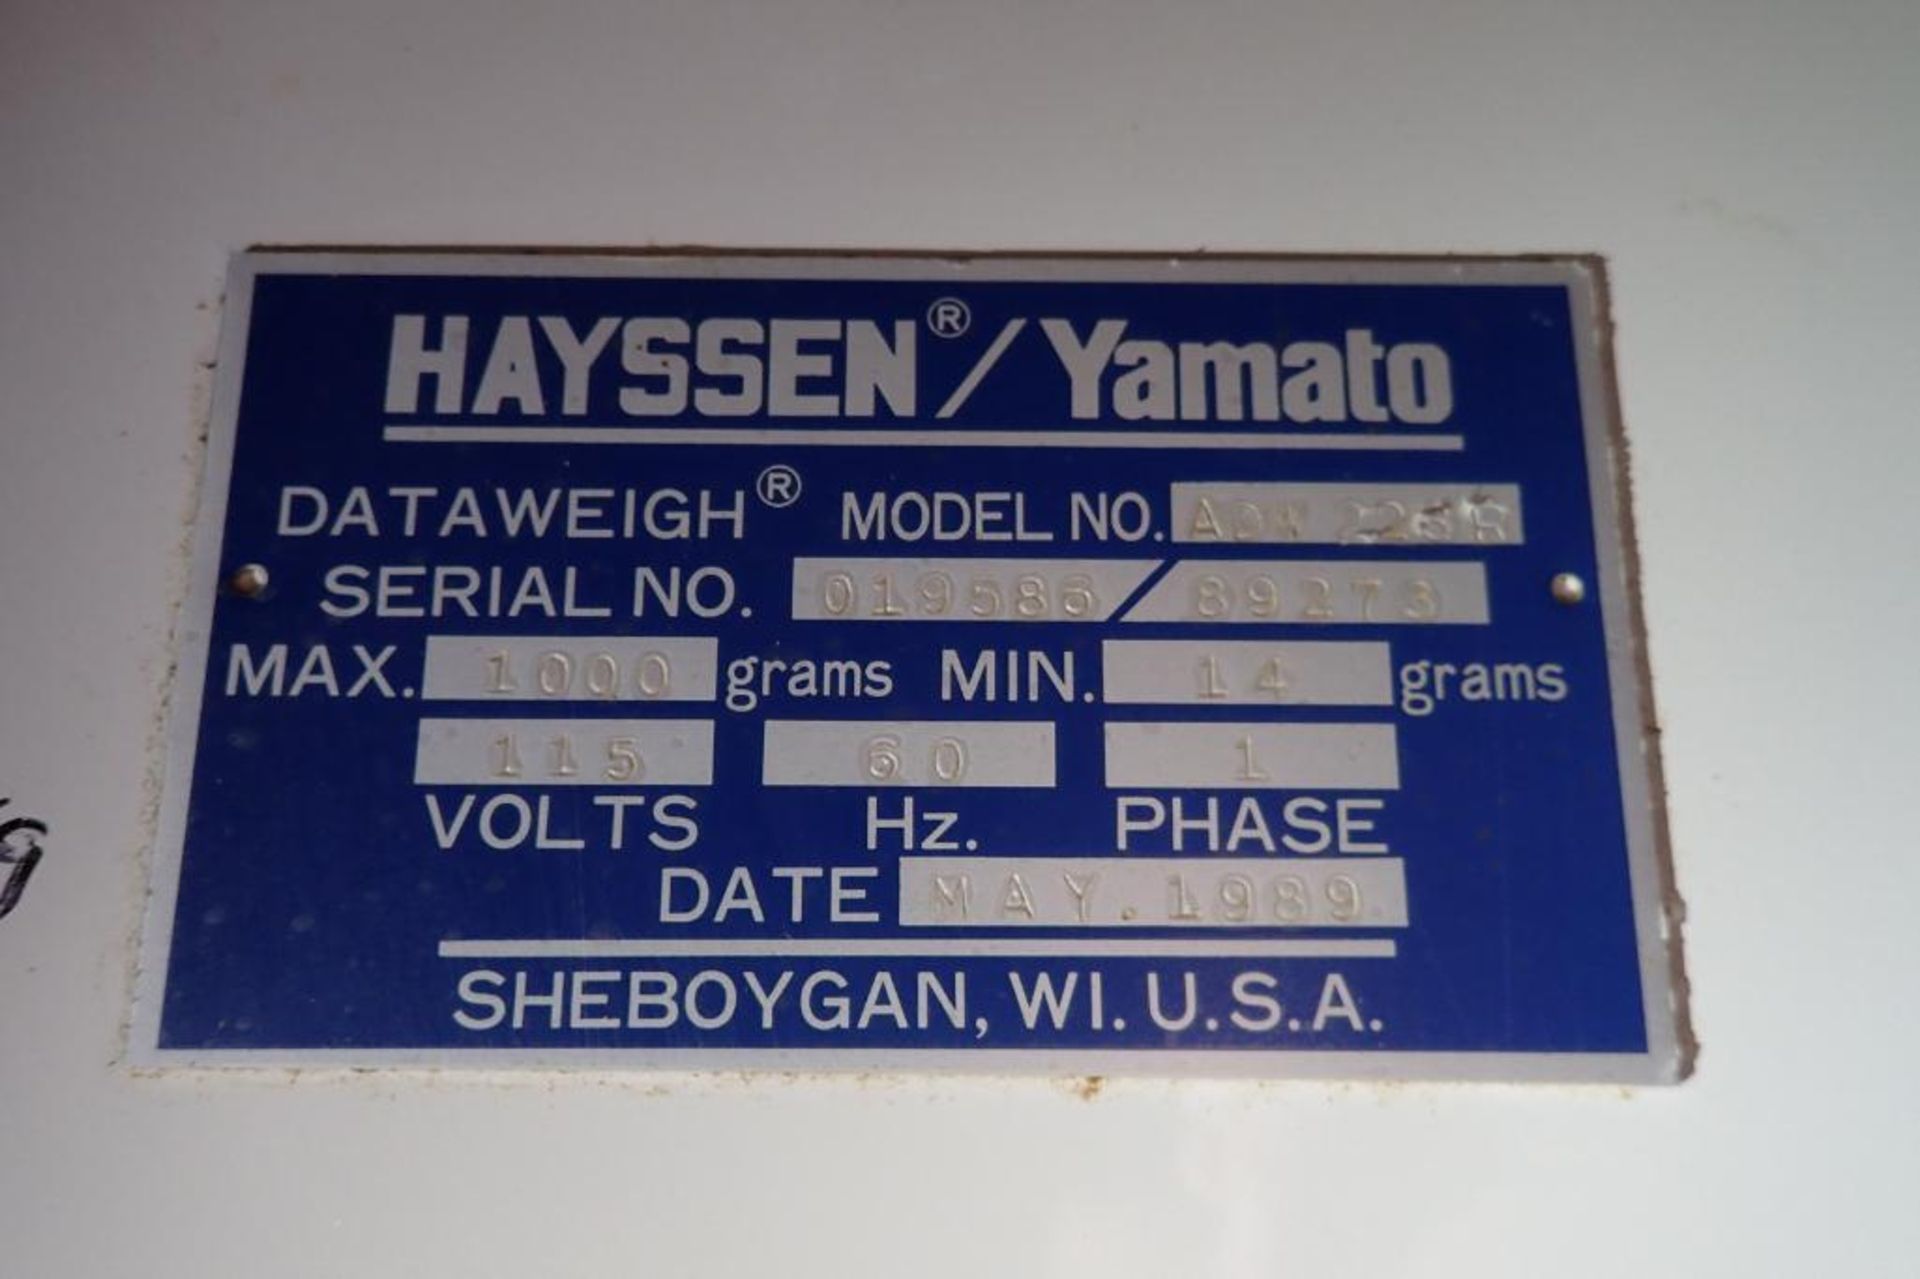 1989 Yamato 12-head scale, Model ADW 223R, SN: 019586 89273, 14 - 1000 gram capacity. **Rigging Fee: - Image 8 of 8